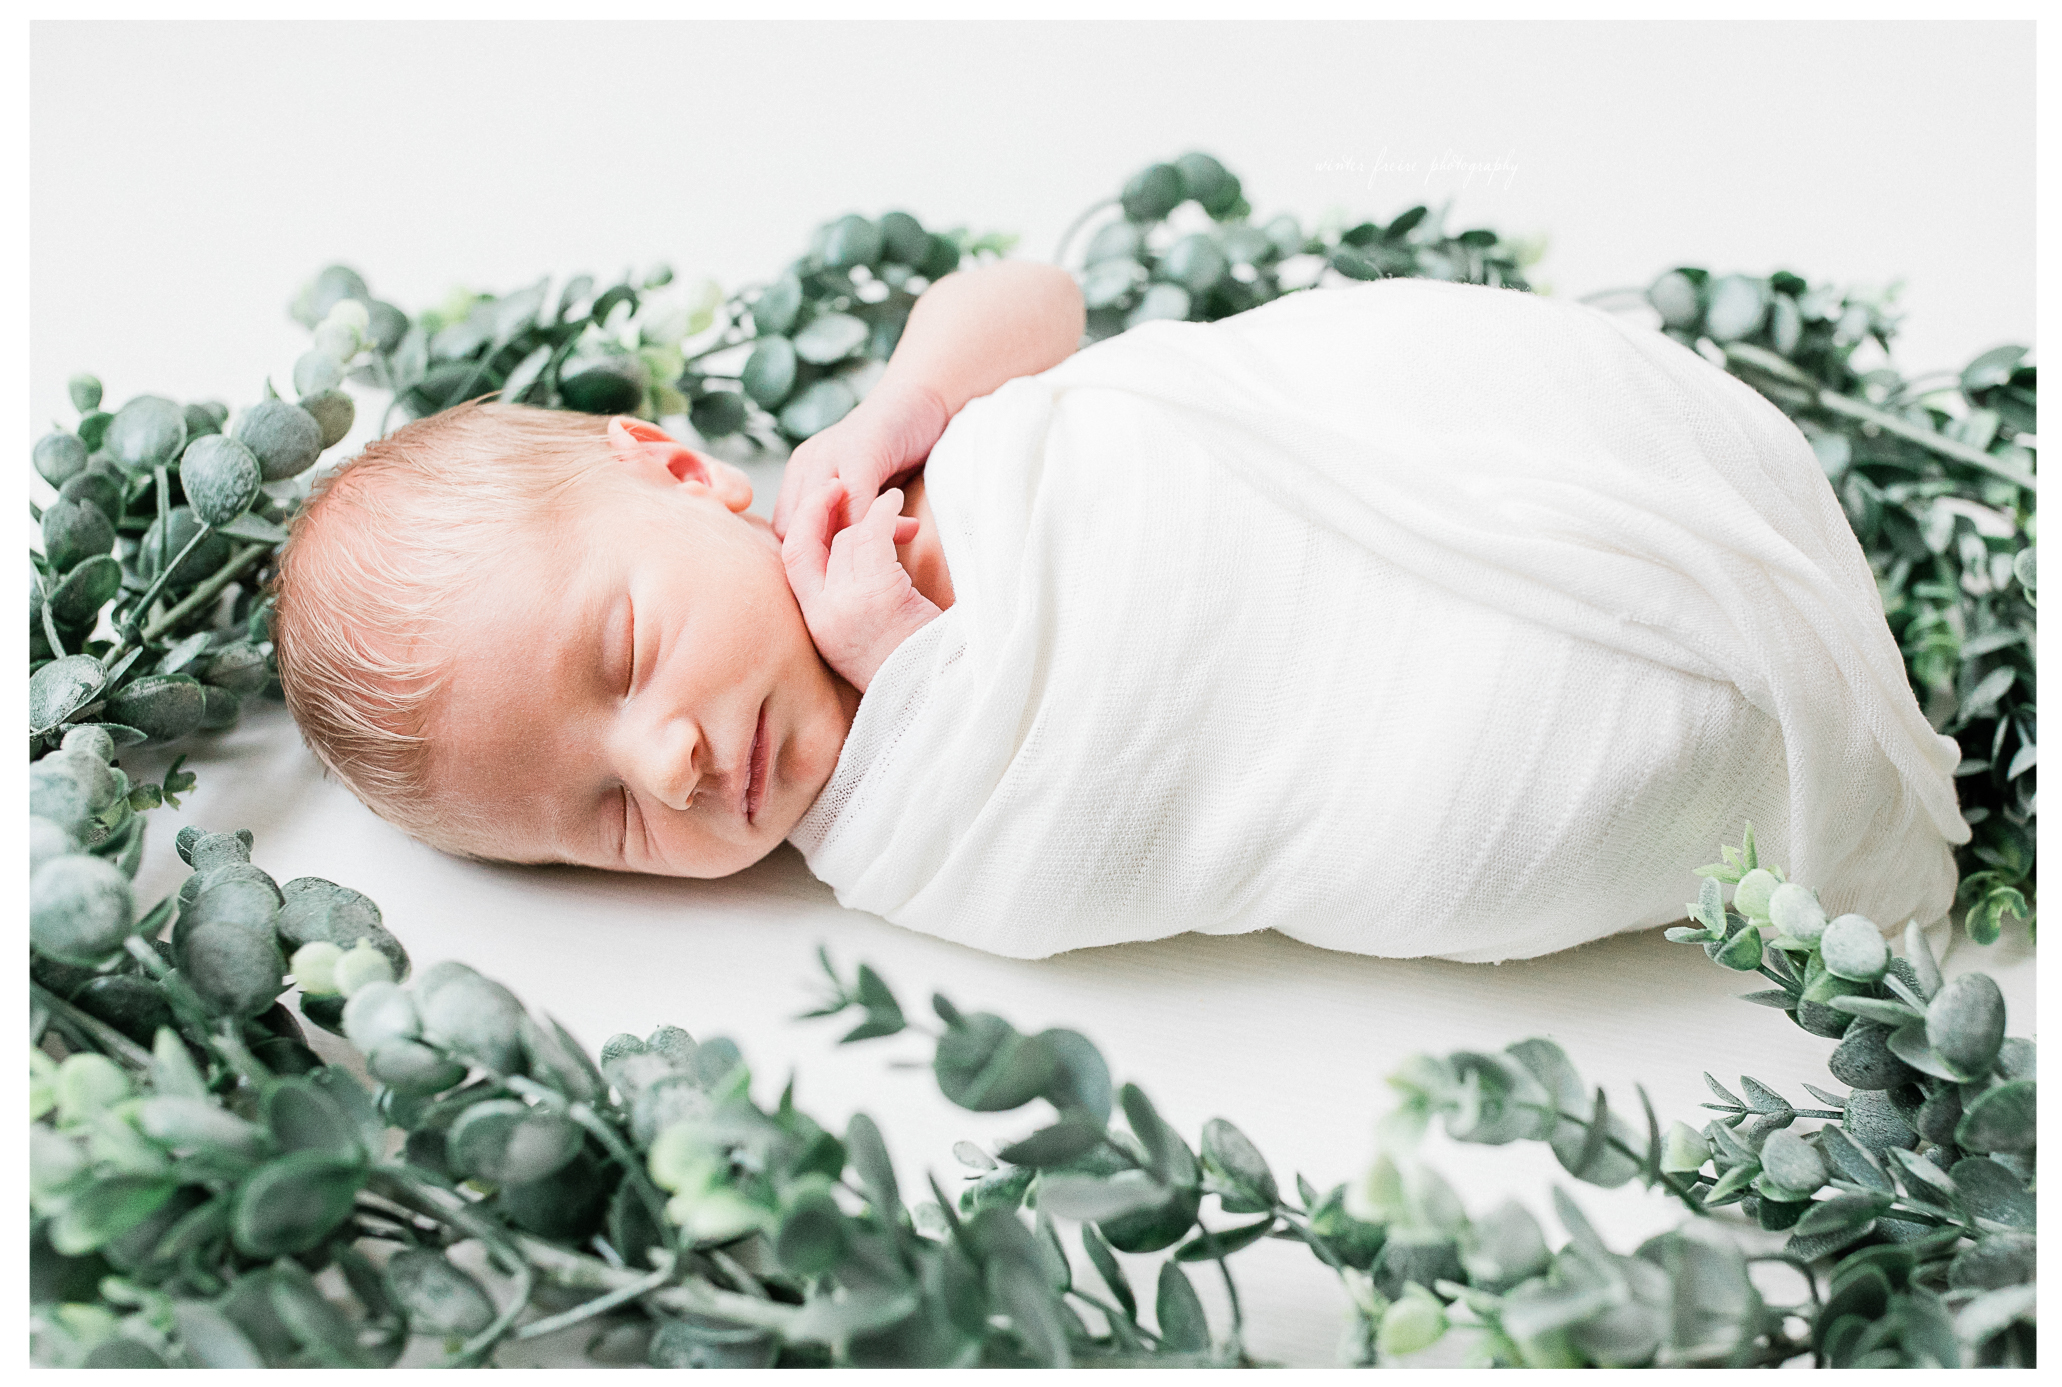 Winter Freire Photography | Elegant Timeless Organic Portraits | Dayton, Ohio Family Photography | Newborn Photographer | Fine Art Photographer Dayton, Ohio | Organic Newborn Session | Natural Light Photographer